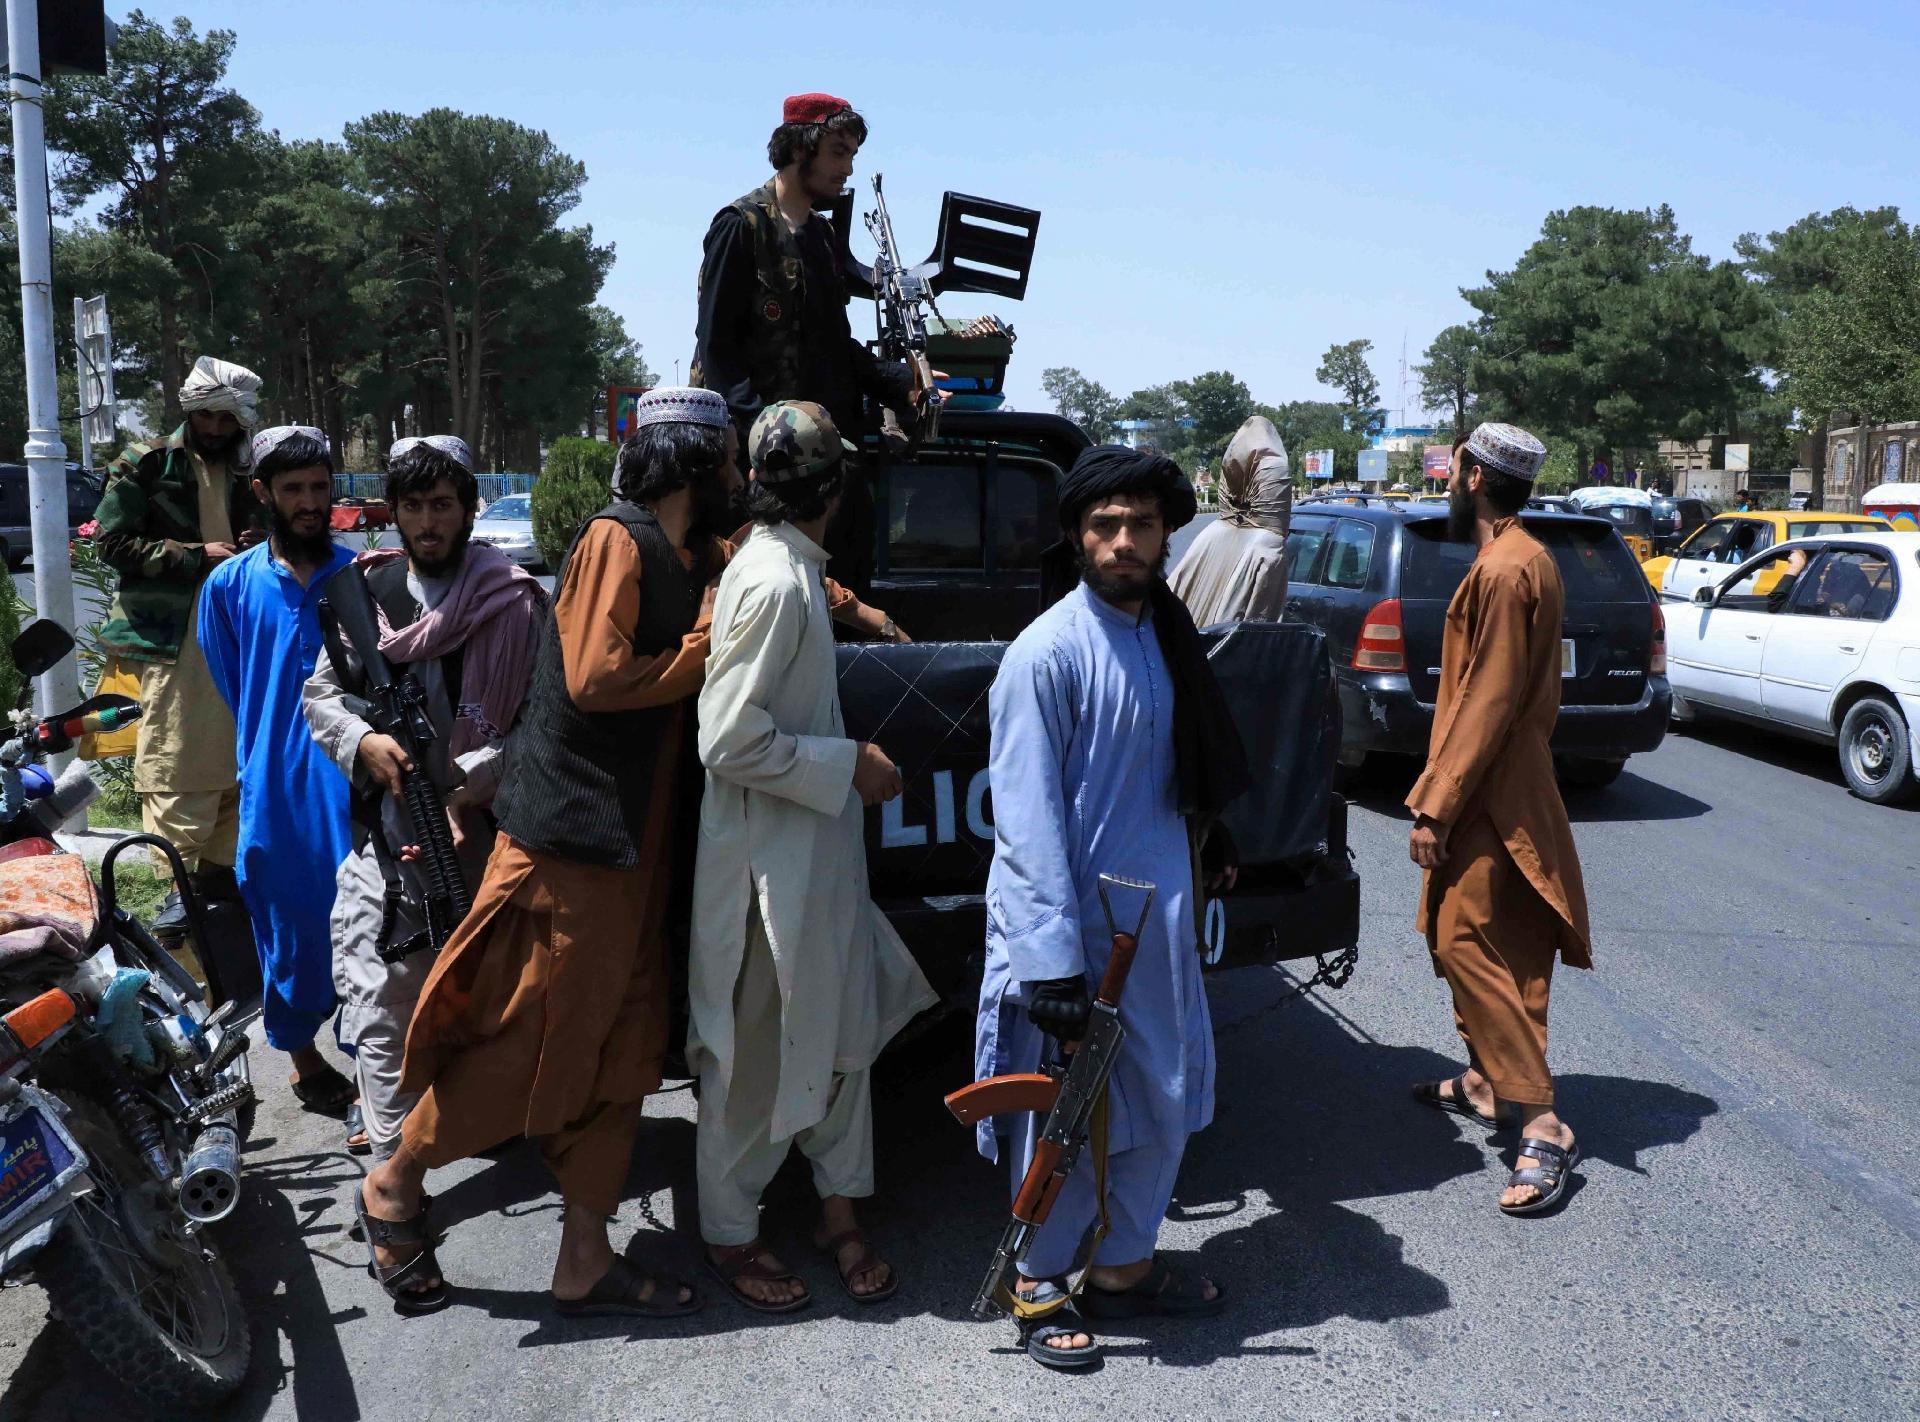 Integrantes do Taleban fazem patrulha nas ruas de Herat - Stringer/Reuters